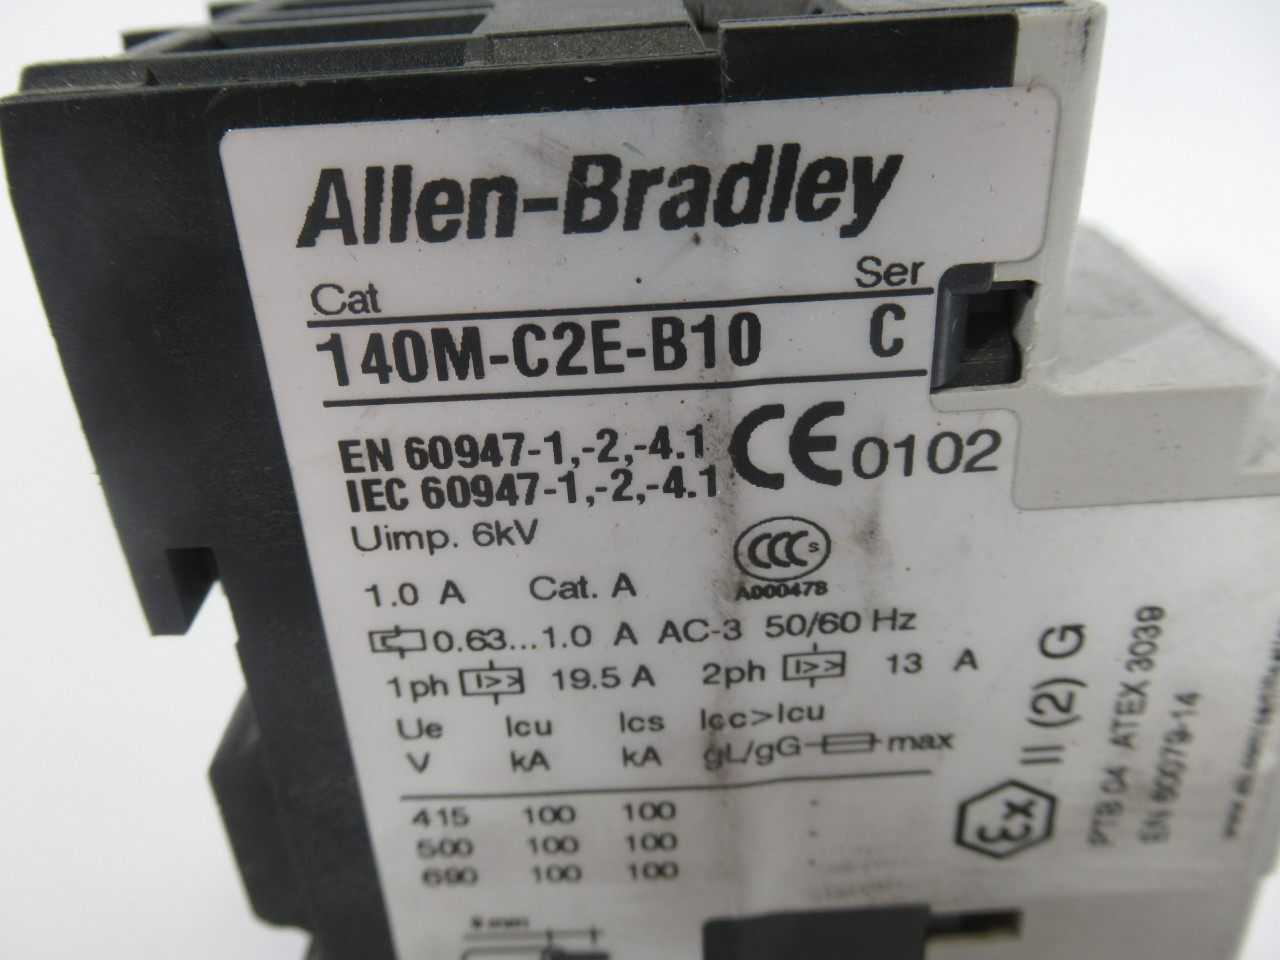 Allen-Bradley 140M-C2E-B10 Ser. C Motor Control Circuit Breaker 0.63-1A USED